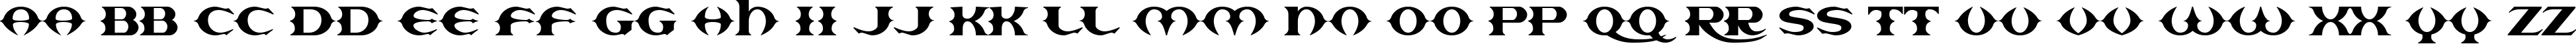 Пример написания английского алфавита шрифтом Europa